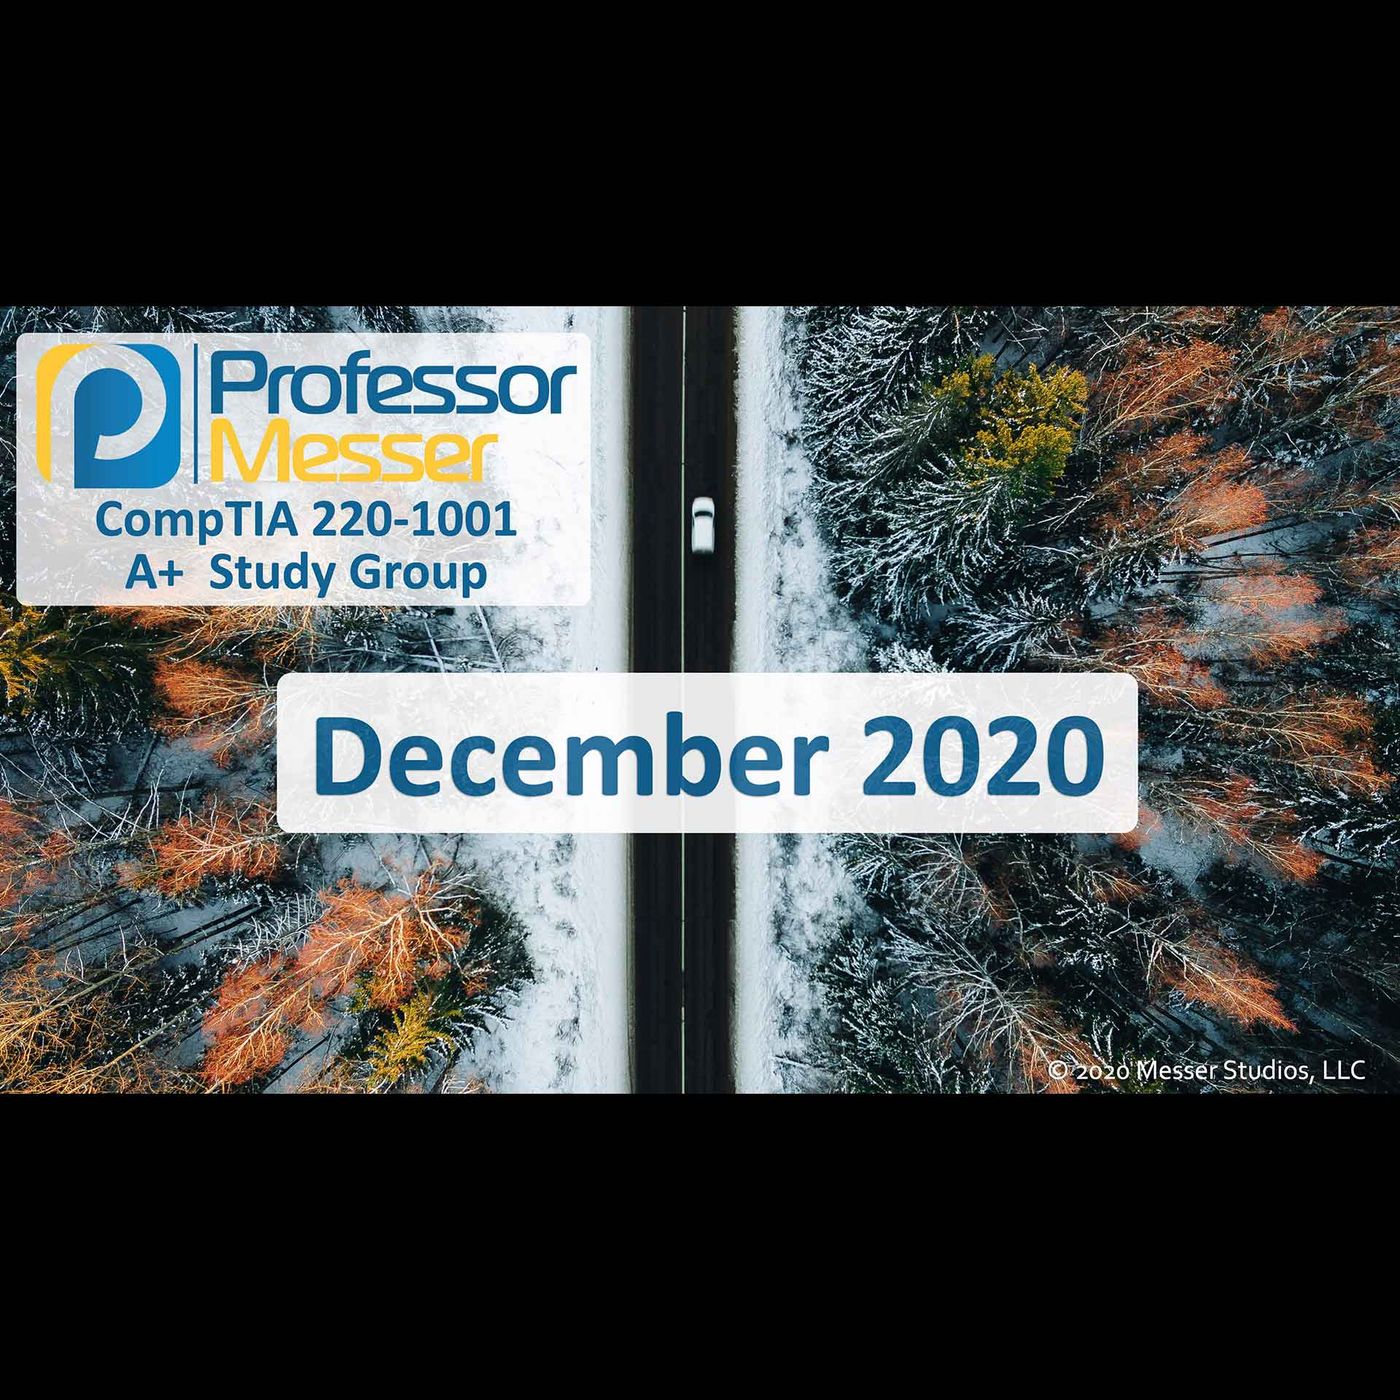 Professor Messer's CompTIA 220-1001 A+ Study Group - December 2020